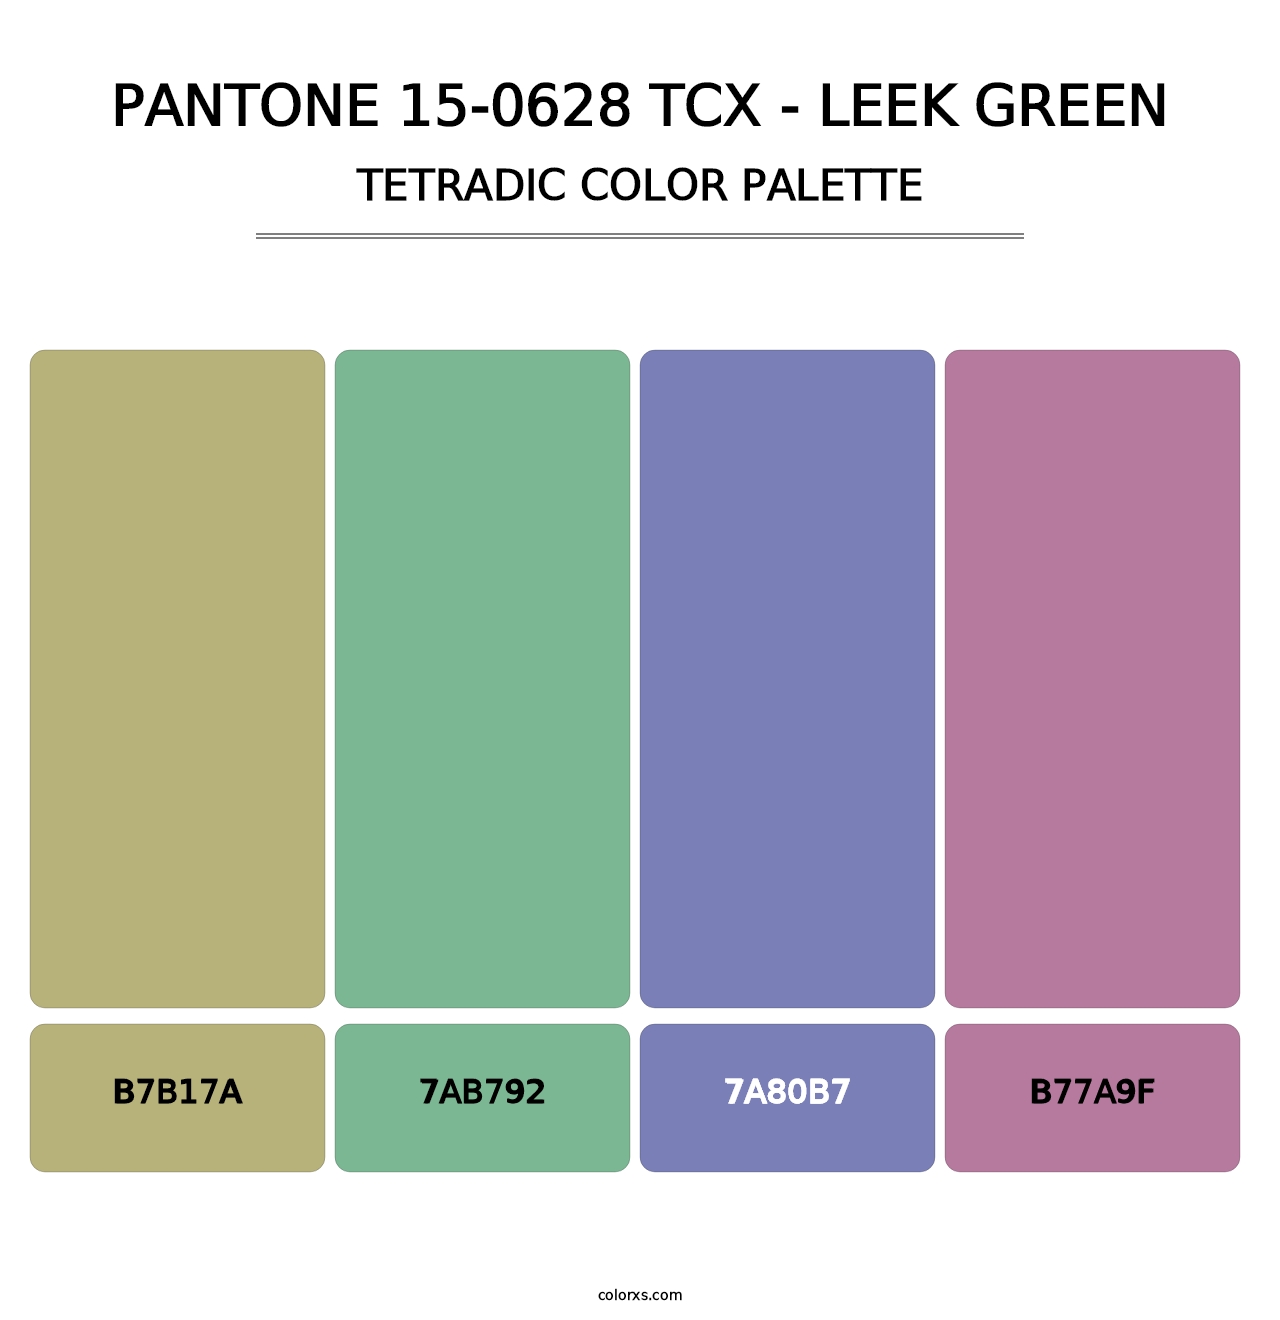 PANTONE 15-0628 TCX - Leek Green - Tetradic Color Palette